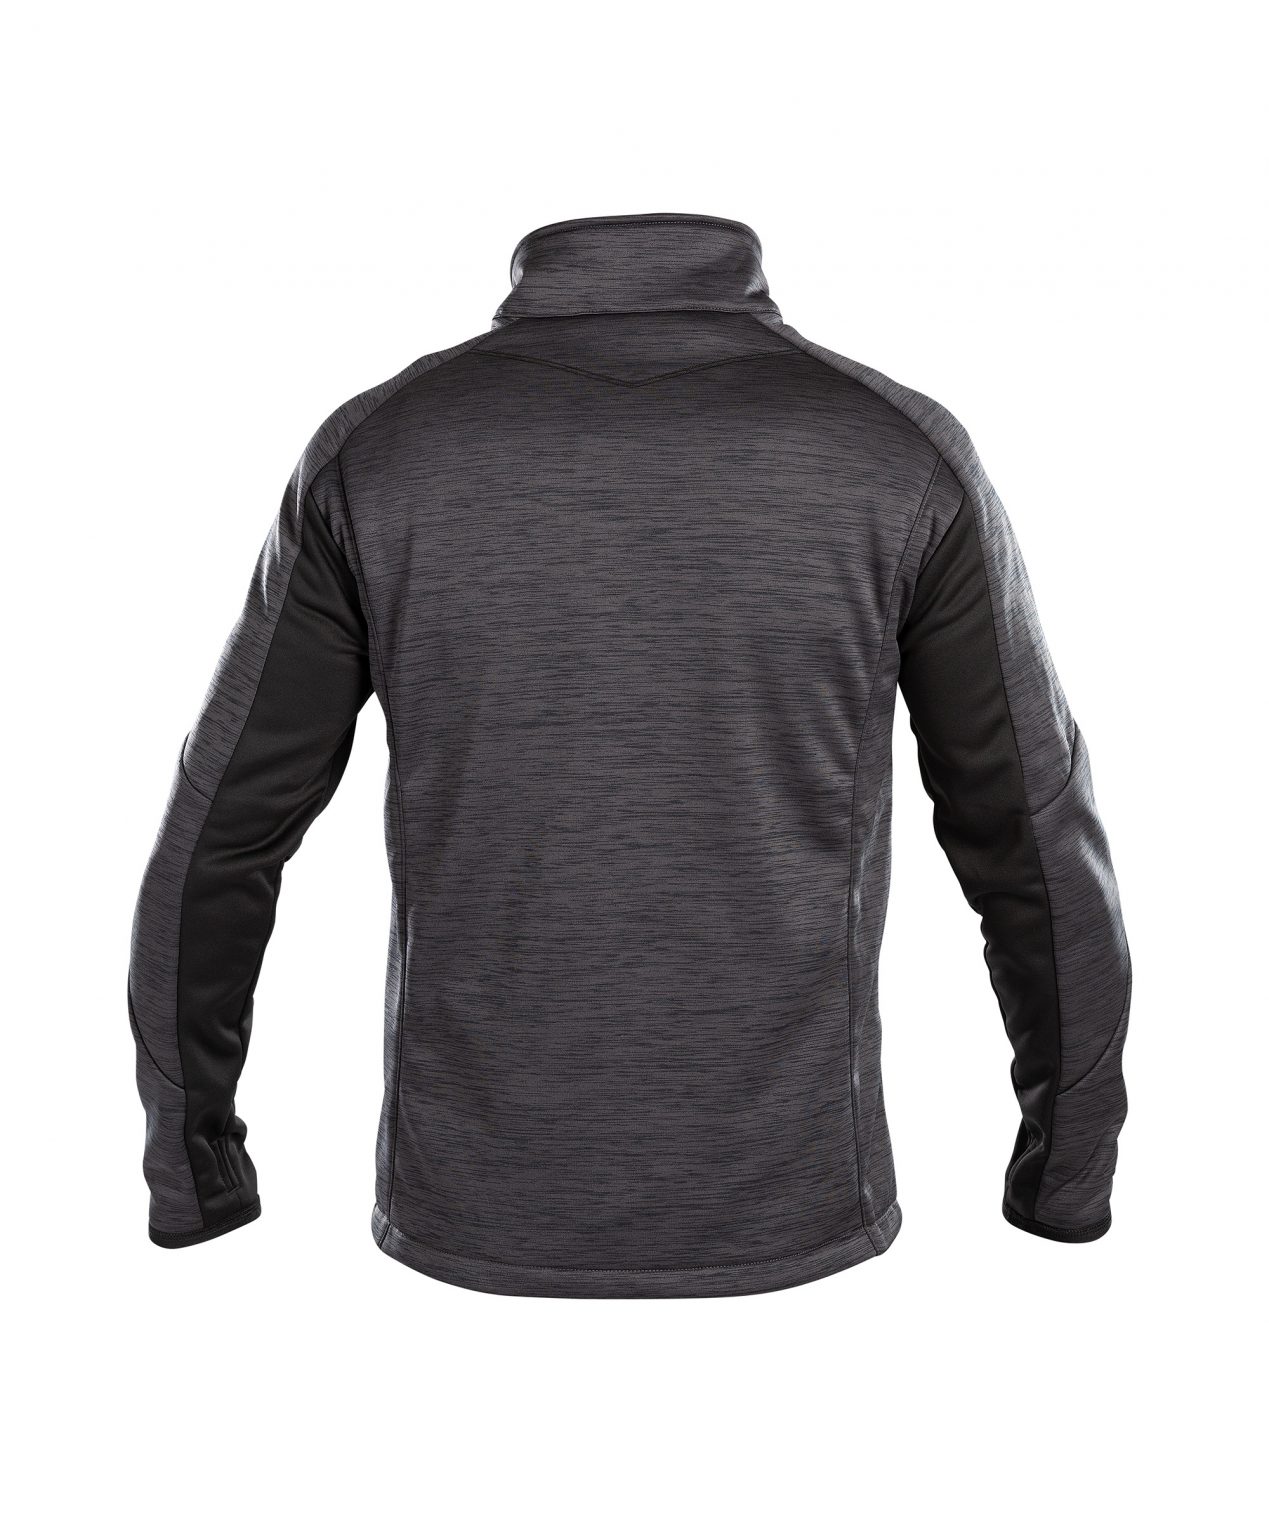 convex midlayer jacket anthracite grey black back